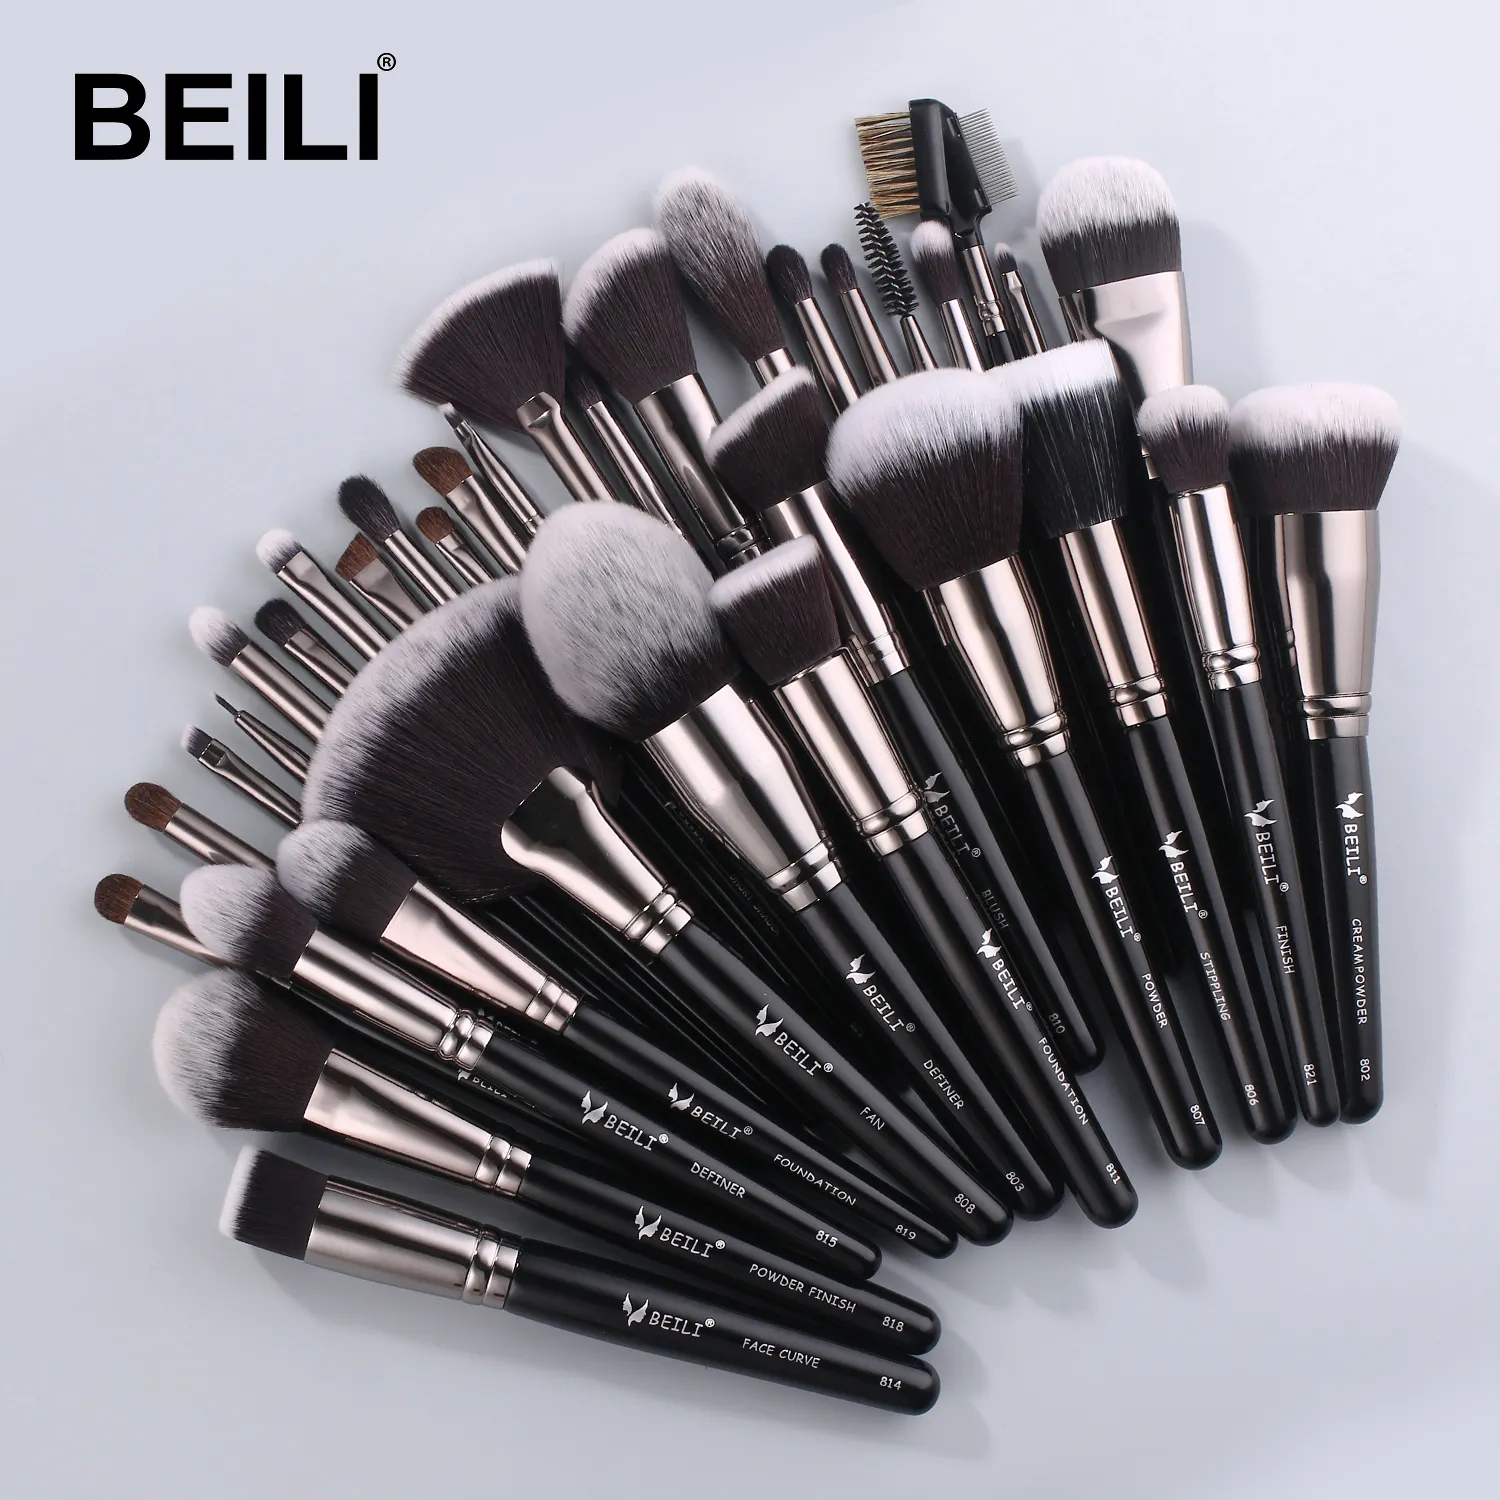 BEILI brush sets makeup 35PCS Black Makeup Brushes Kits Wood Handle Box Packing Accept Private Label Customize makeup brush set